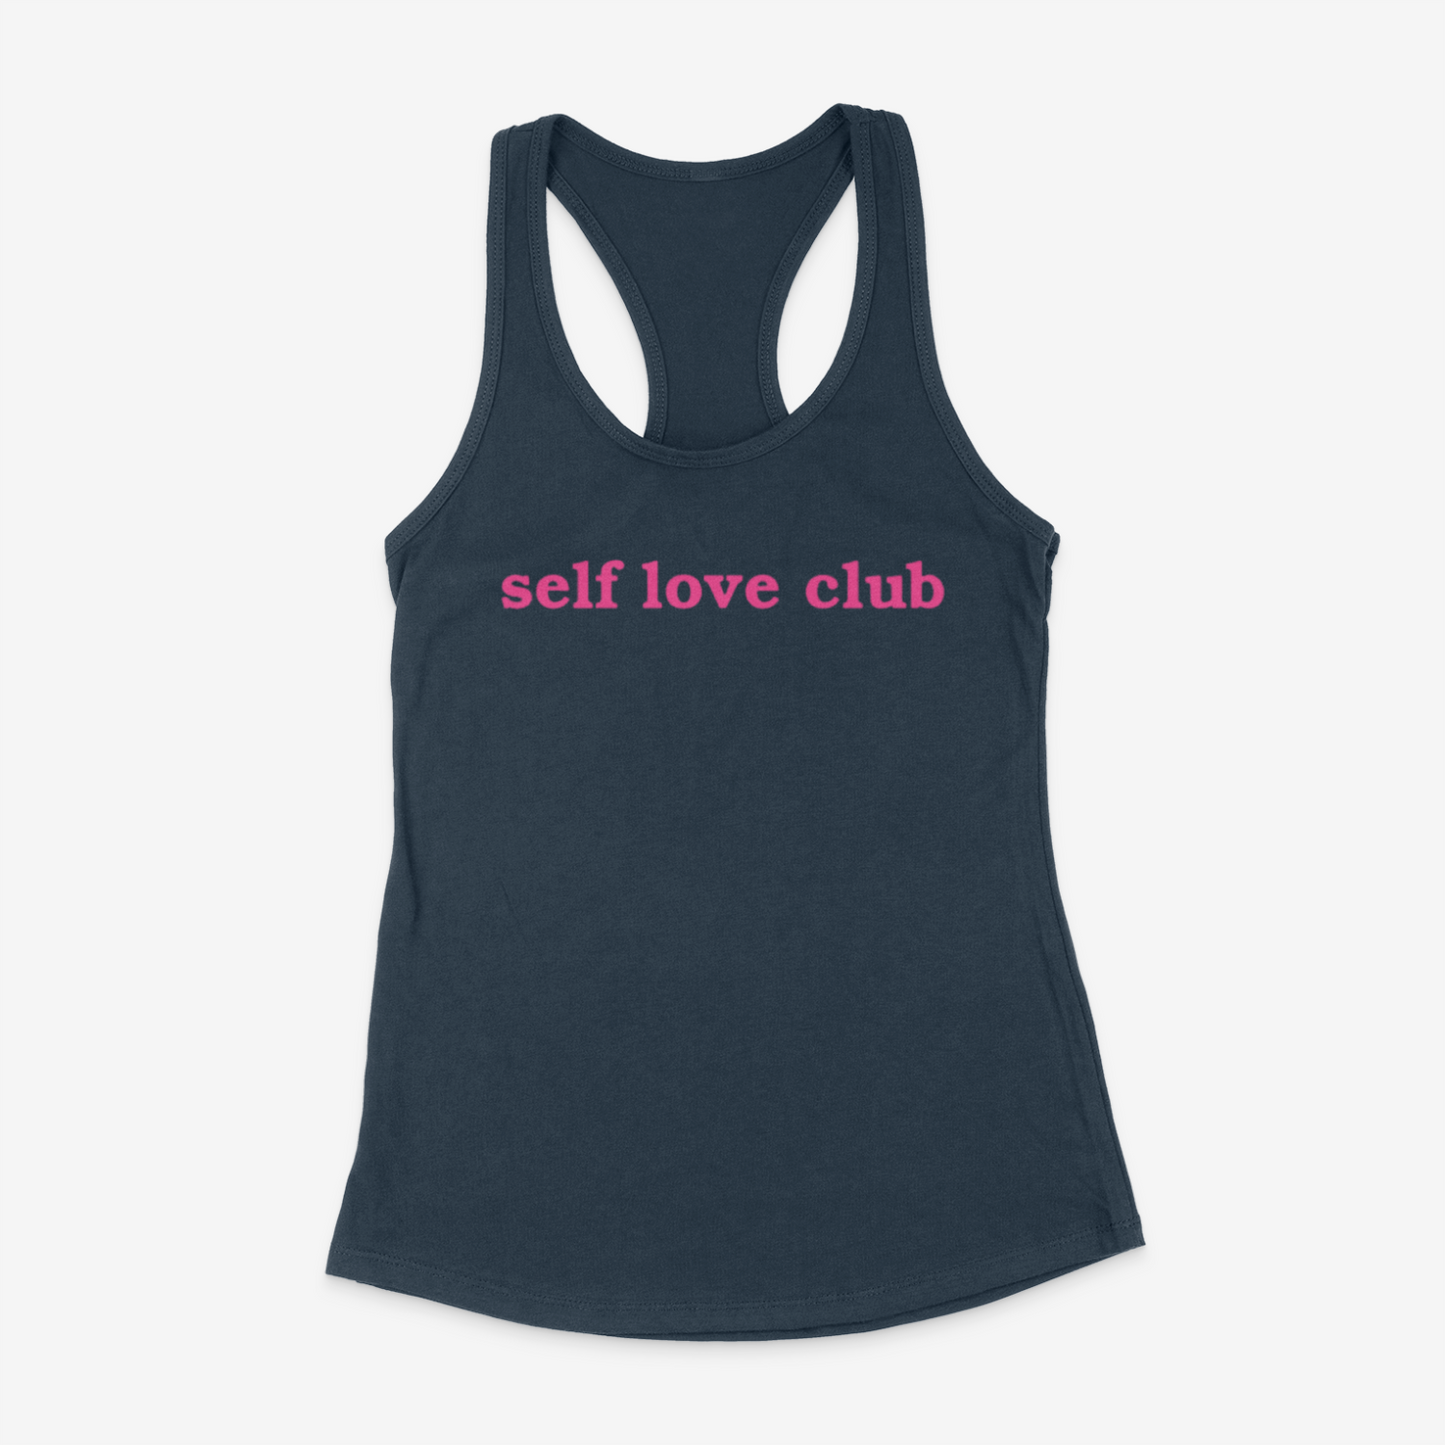 Self Love Club Tank Top (Pink)